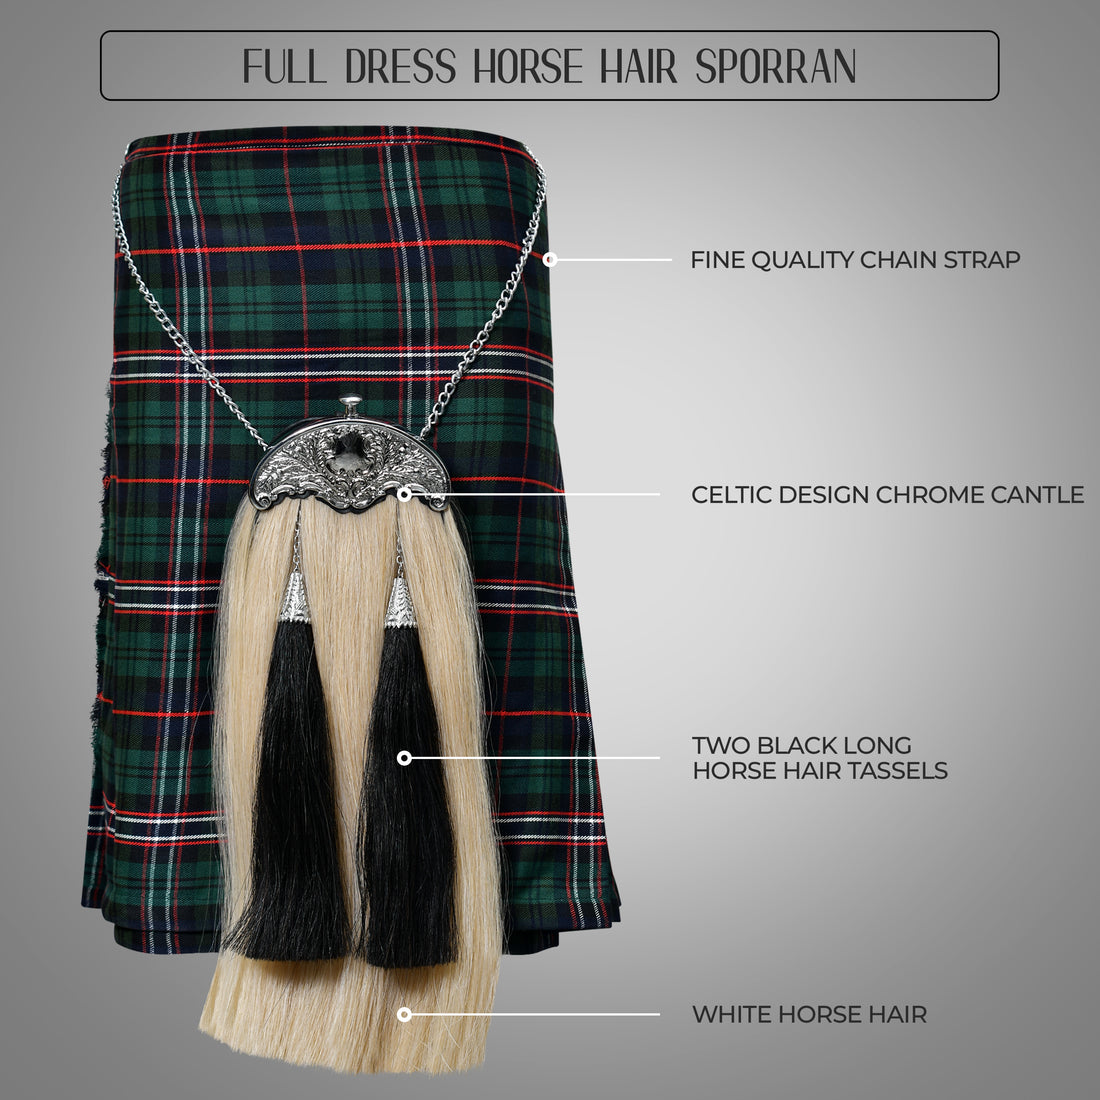 Full Dress Horse Hair Sporran w/ Black Horse Hair Tassels